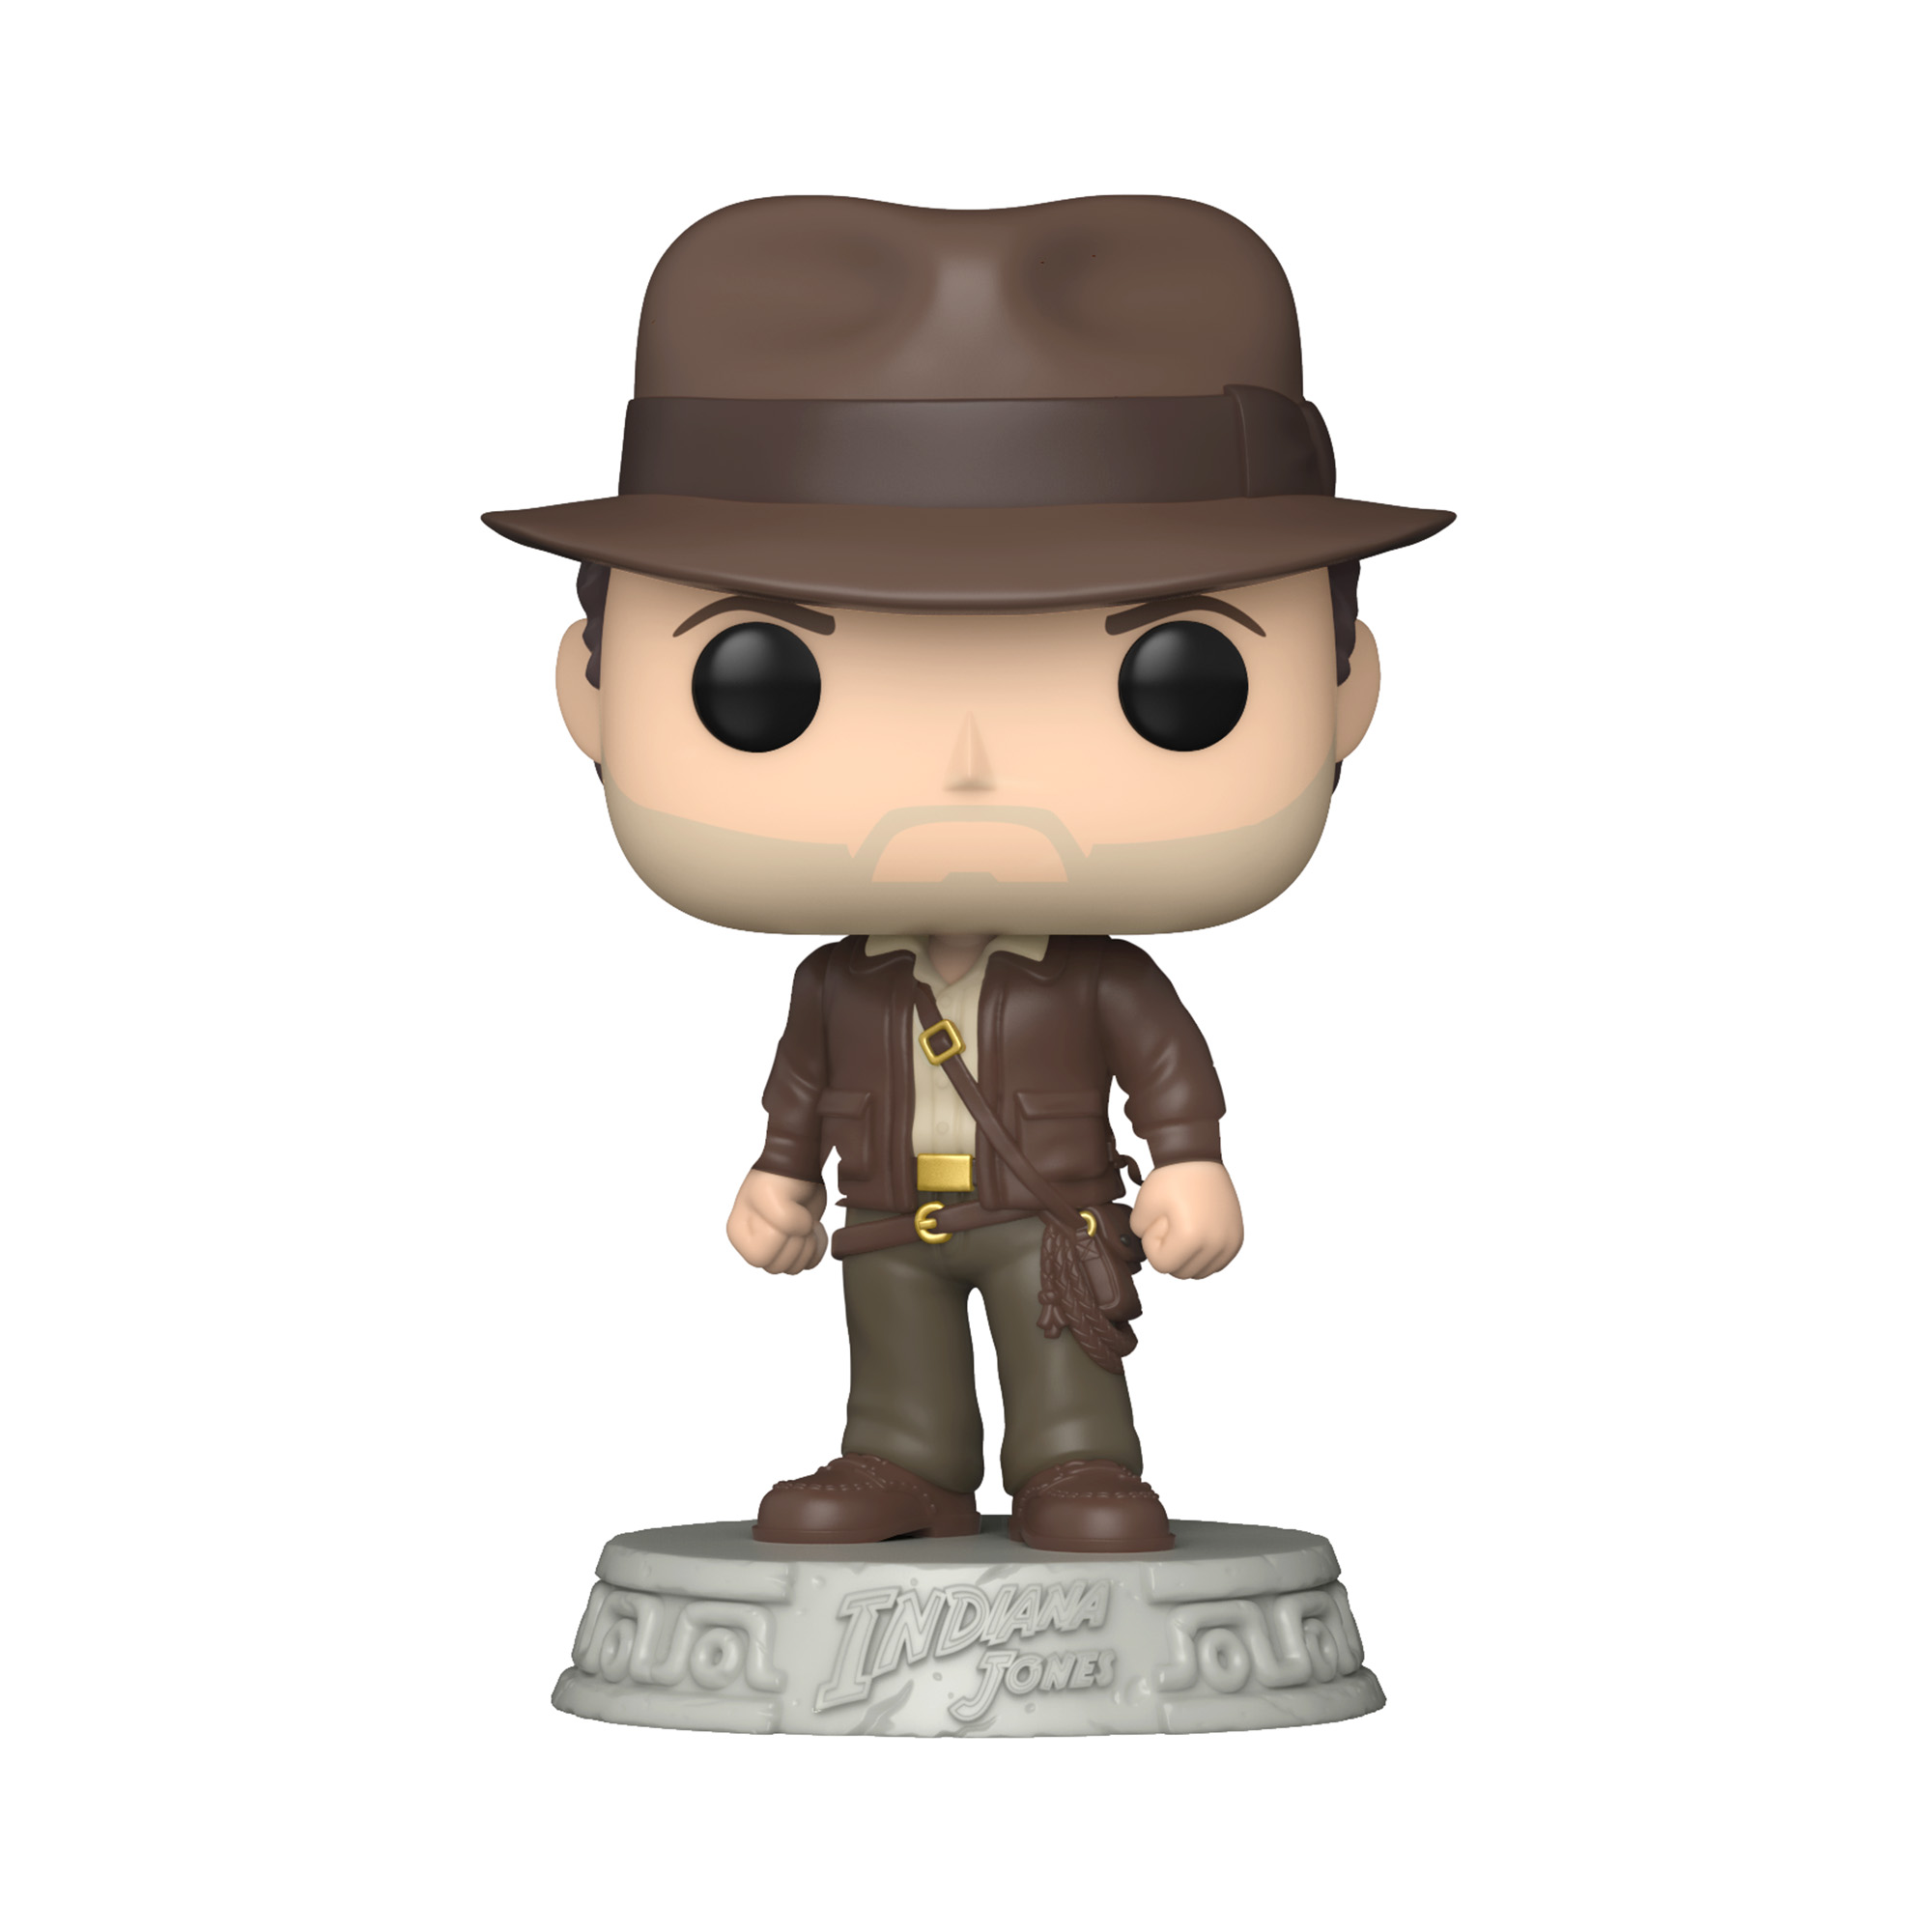 Indiana Jones with Jacket bobblehead